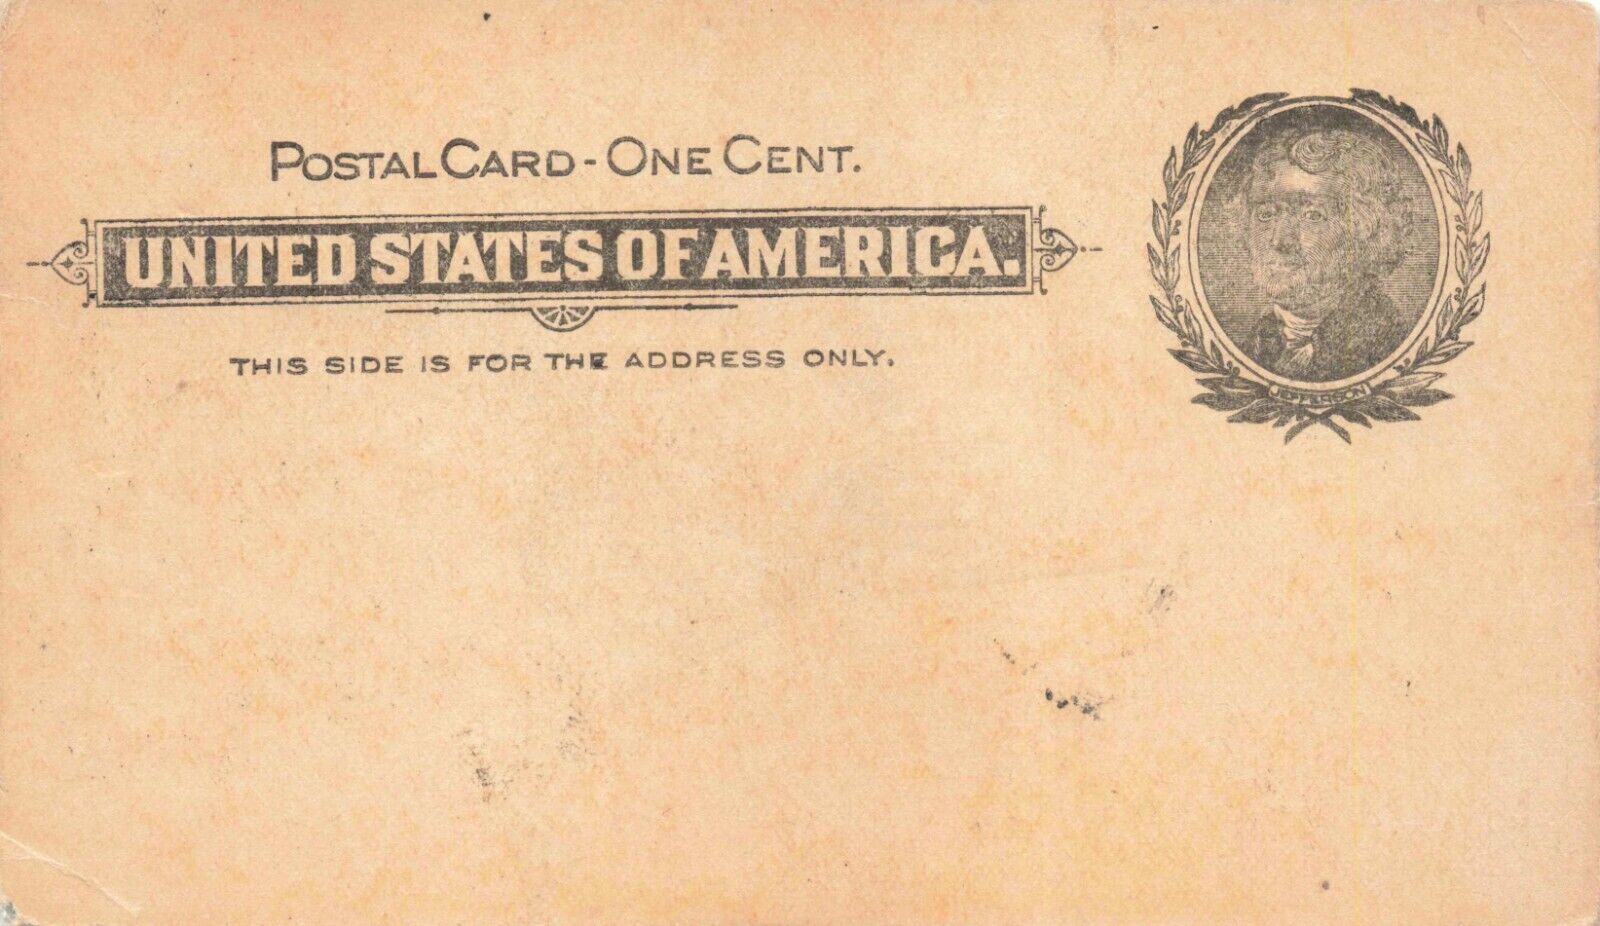 Postcard United States of America Postal Card - One Cent Thomas Jefferson